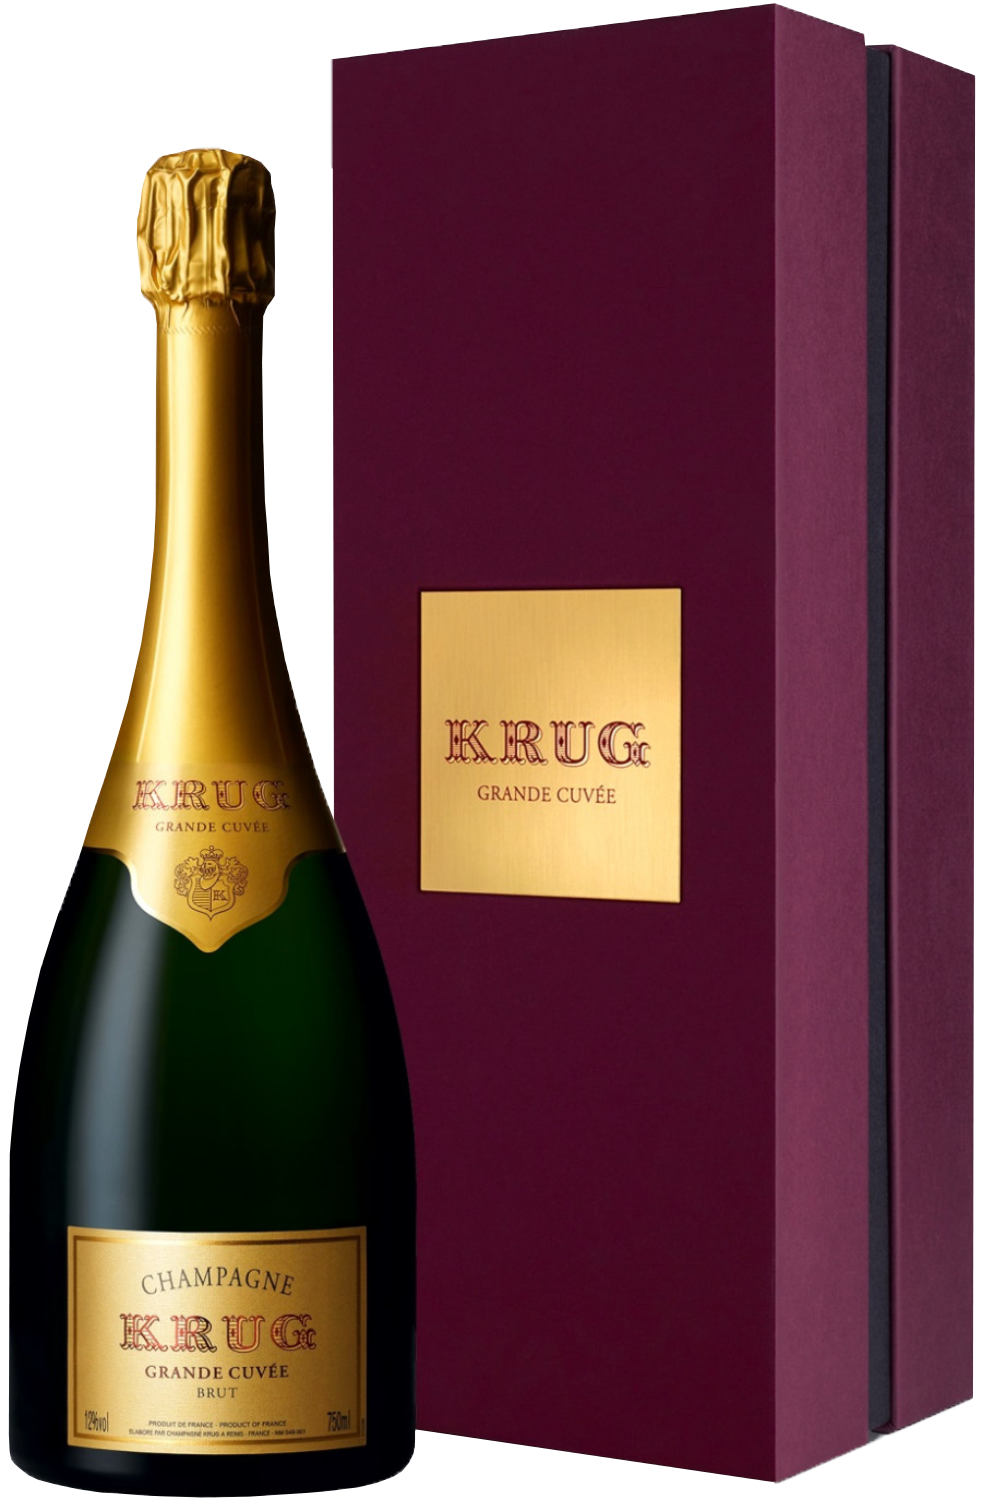 Krug Grande Cuvee Brut Champagne AOC (gift box) instinct cuvee de millenaire brut saumur aoc bouvet ladubay